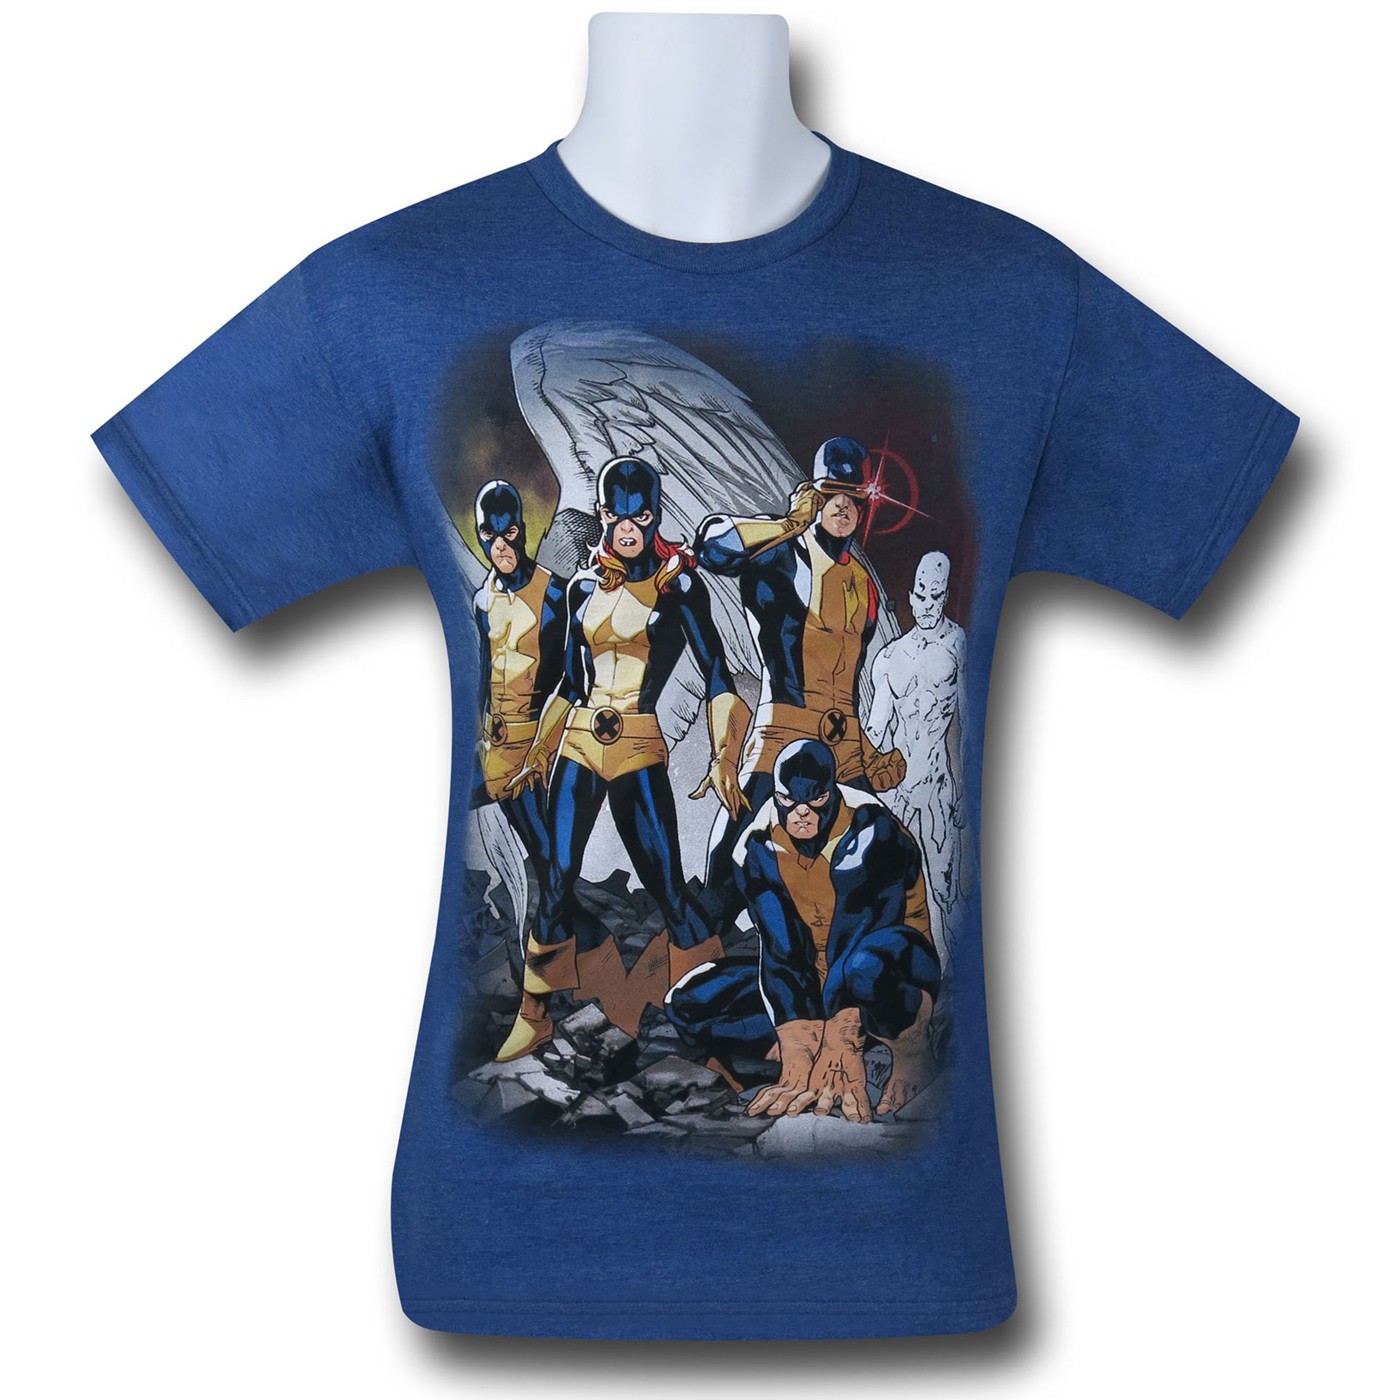 X-Men All New #1 Cover T-Shirt